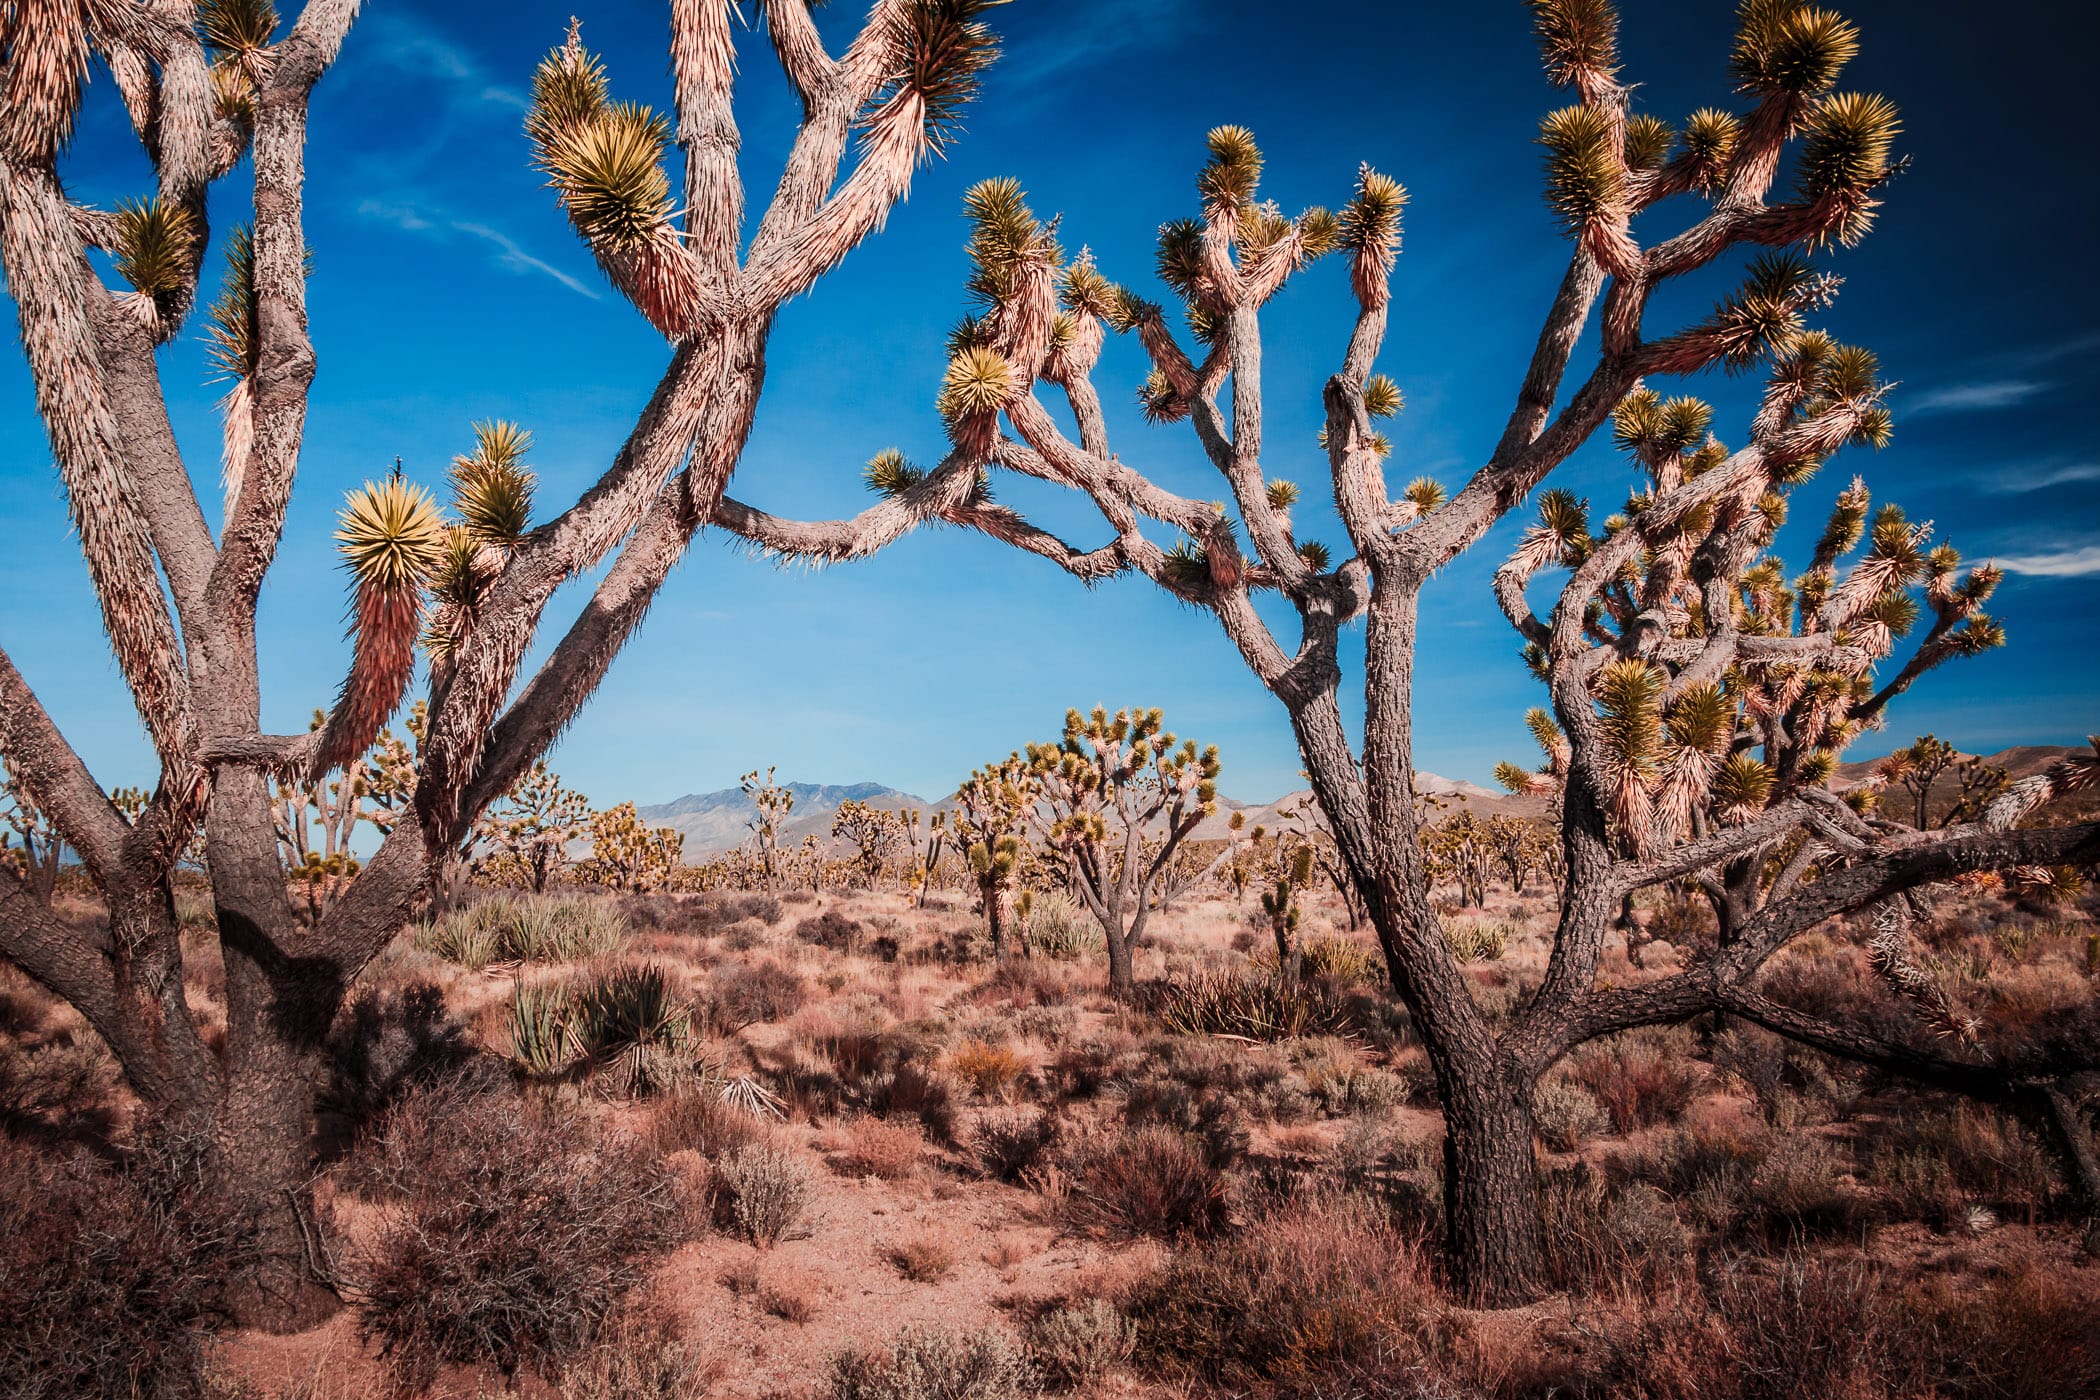 Joshua trees grow in the desert of California's Mojave National Preserve.